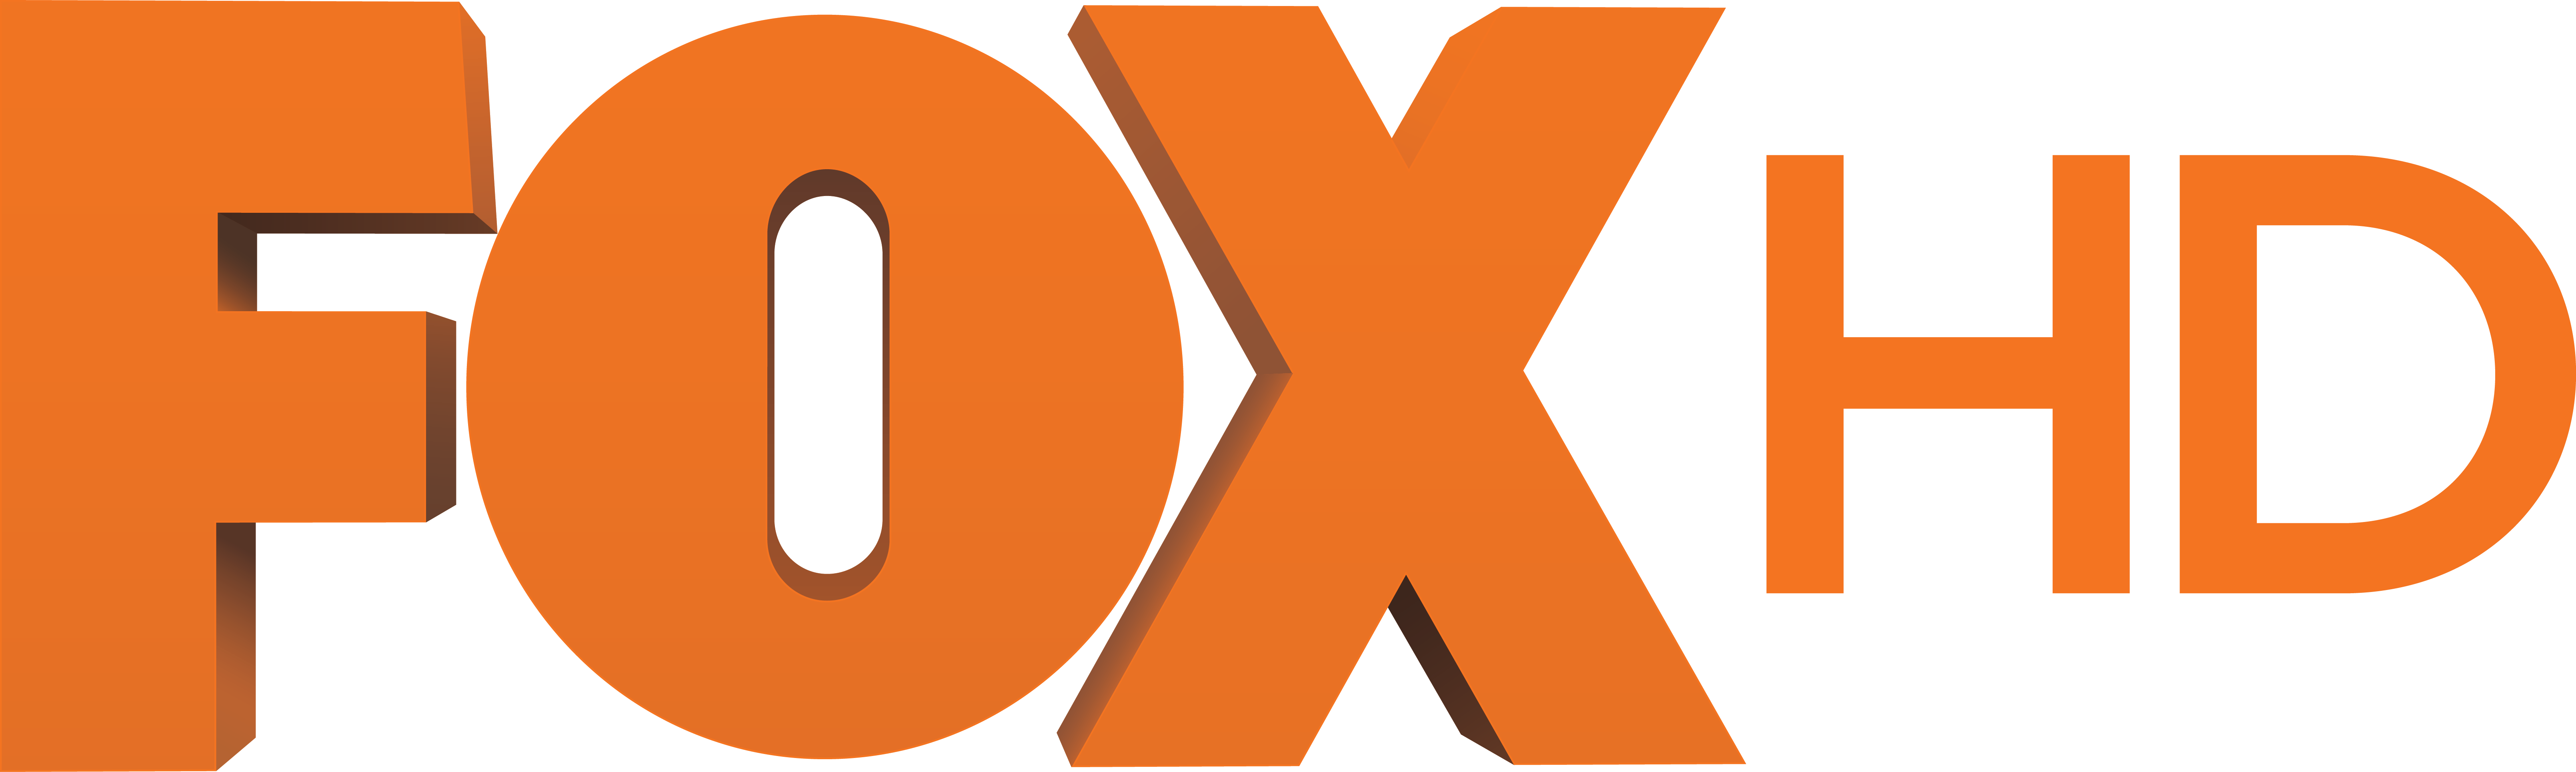 Телеканал Fox. Лого телеканала Фокс. Fox ем